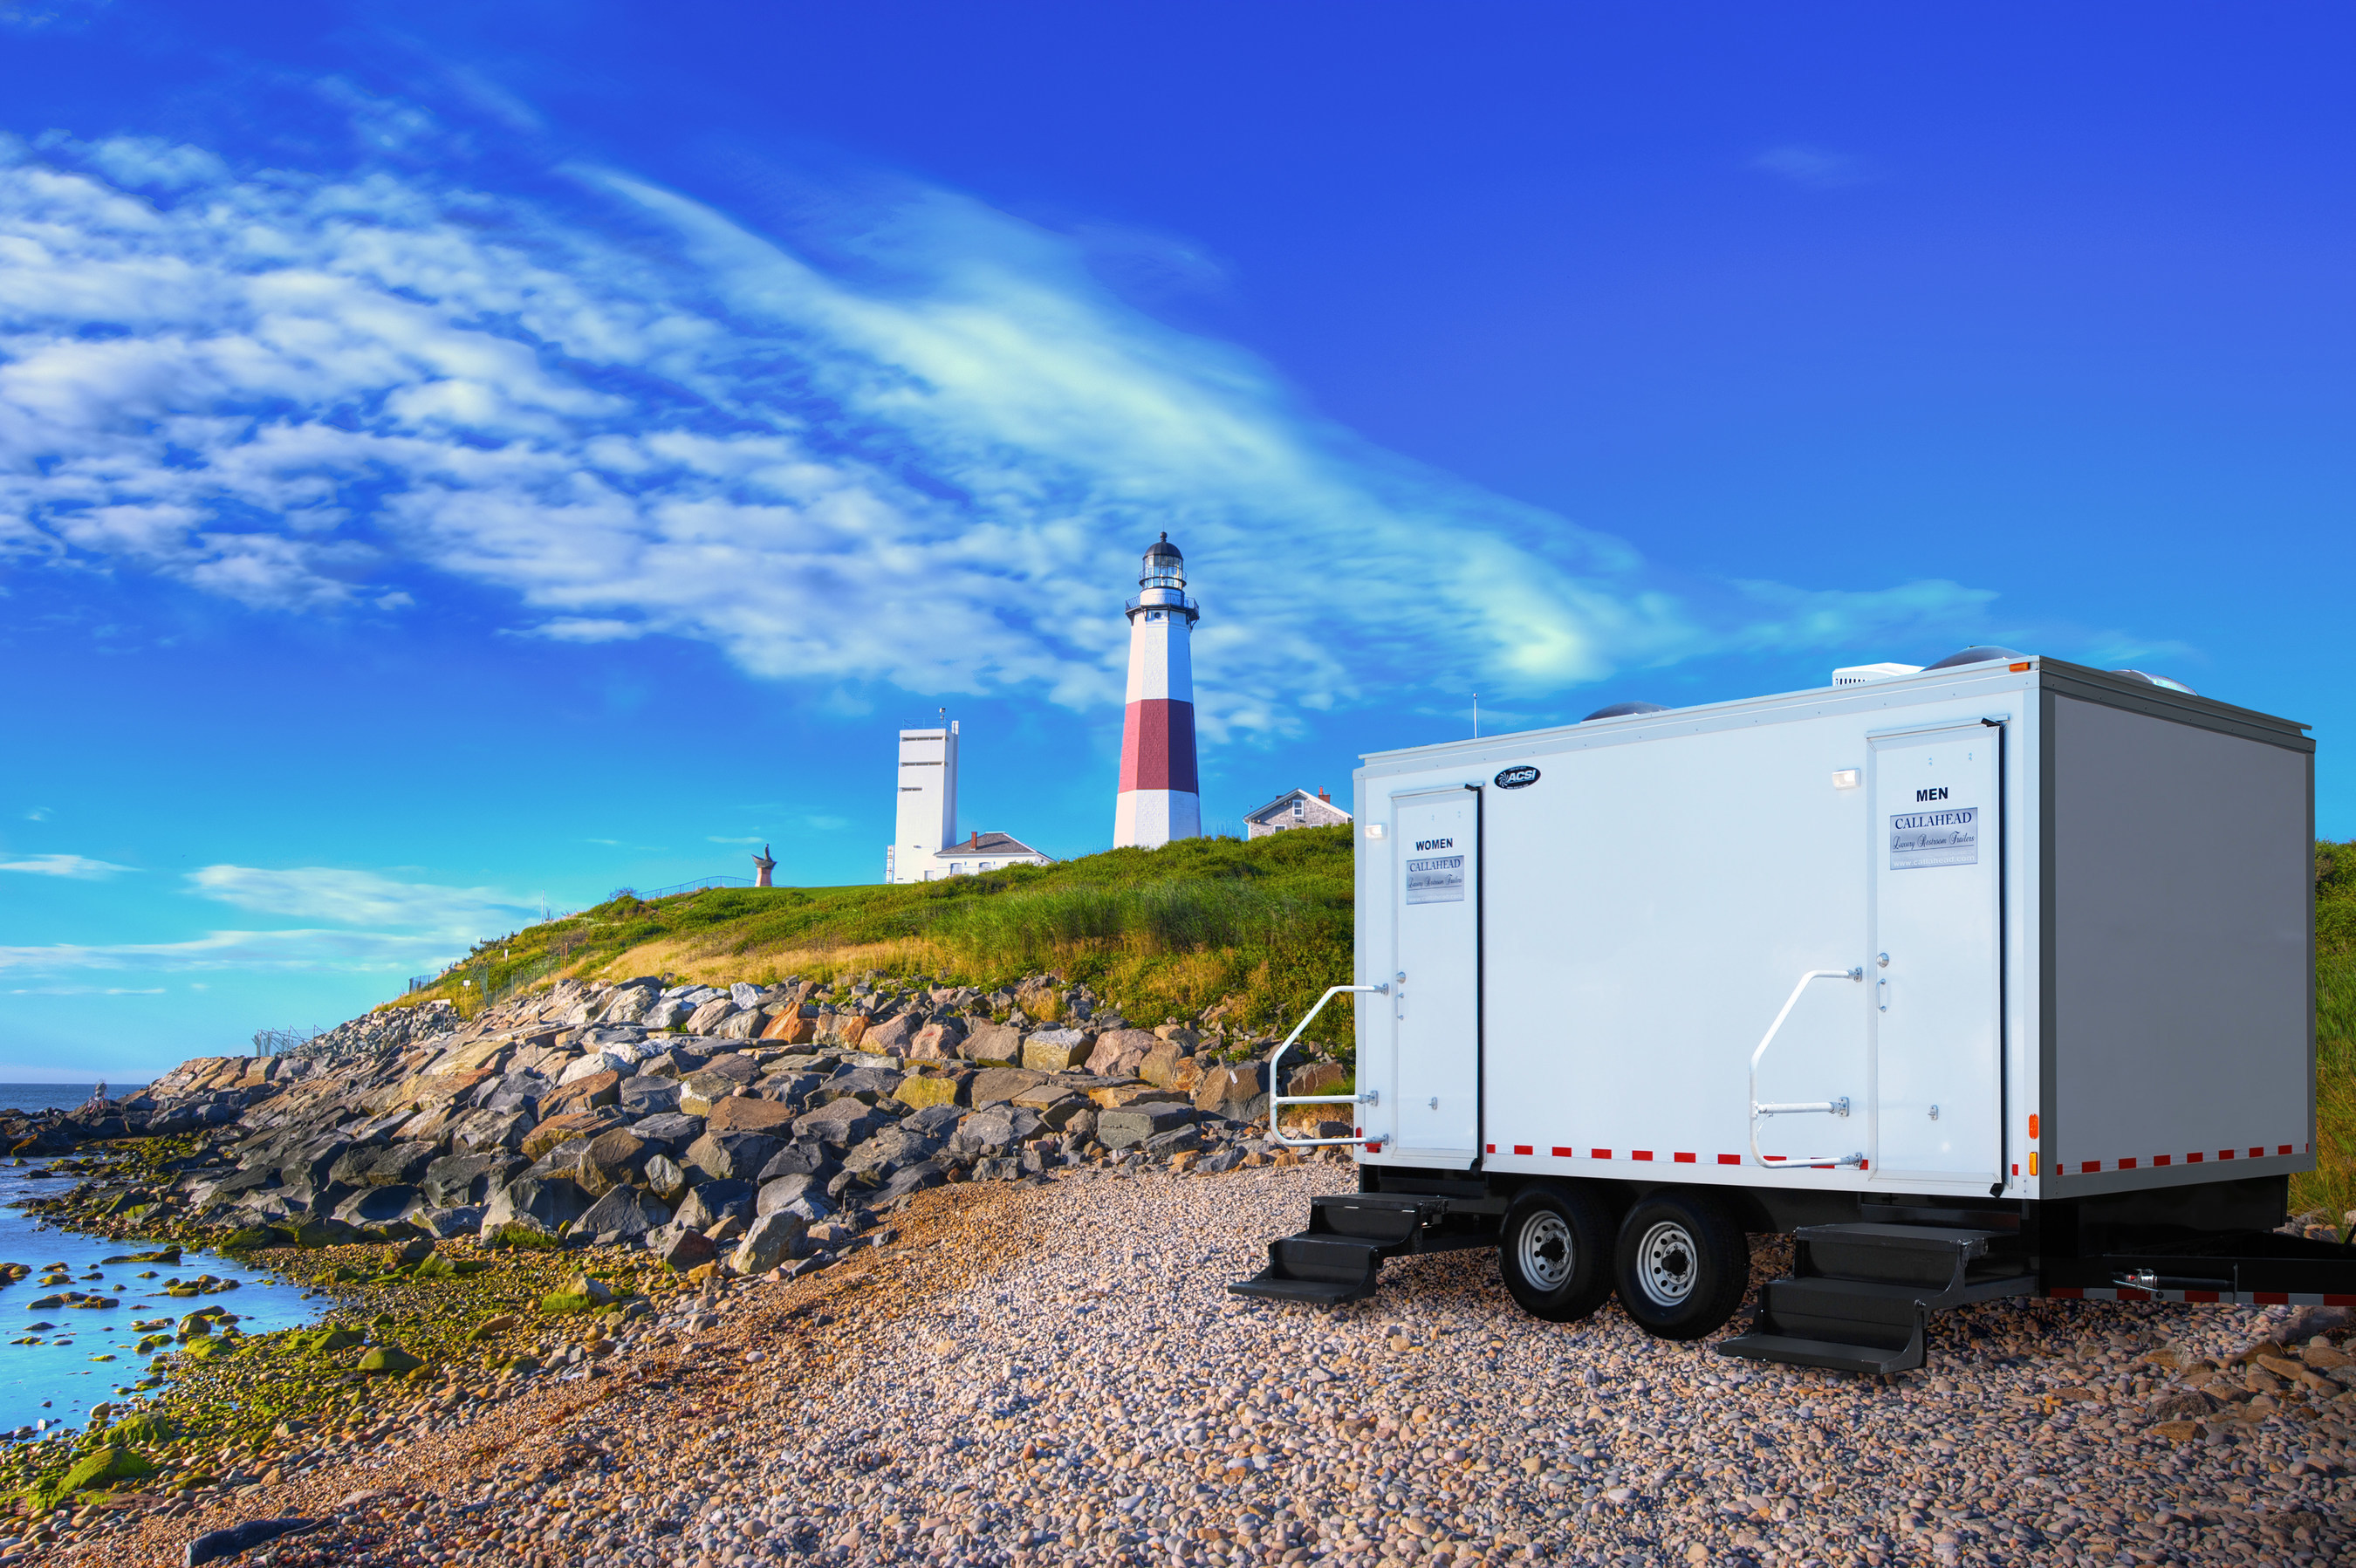 The Atlantic Portable Restroom trailer